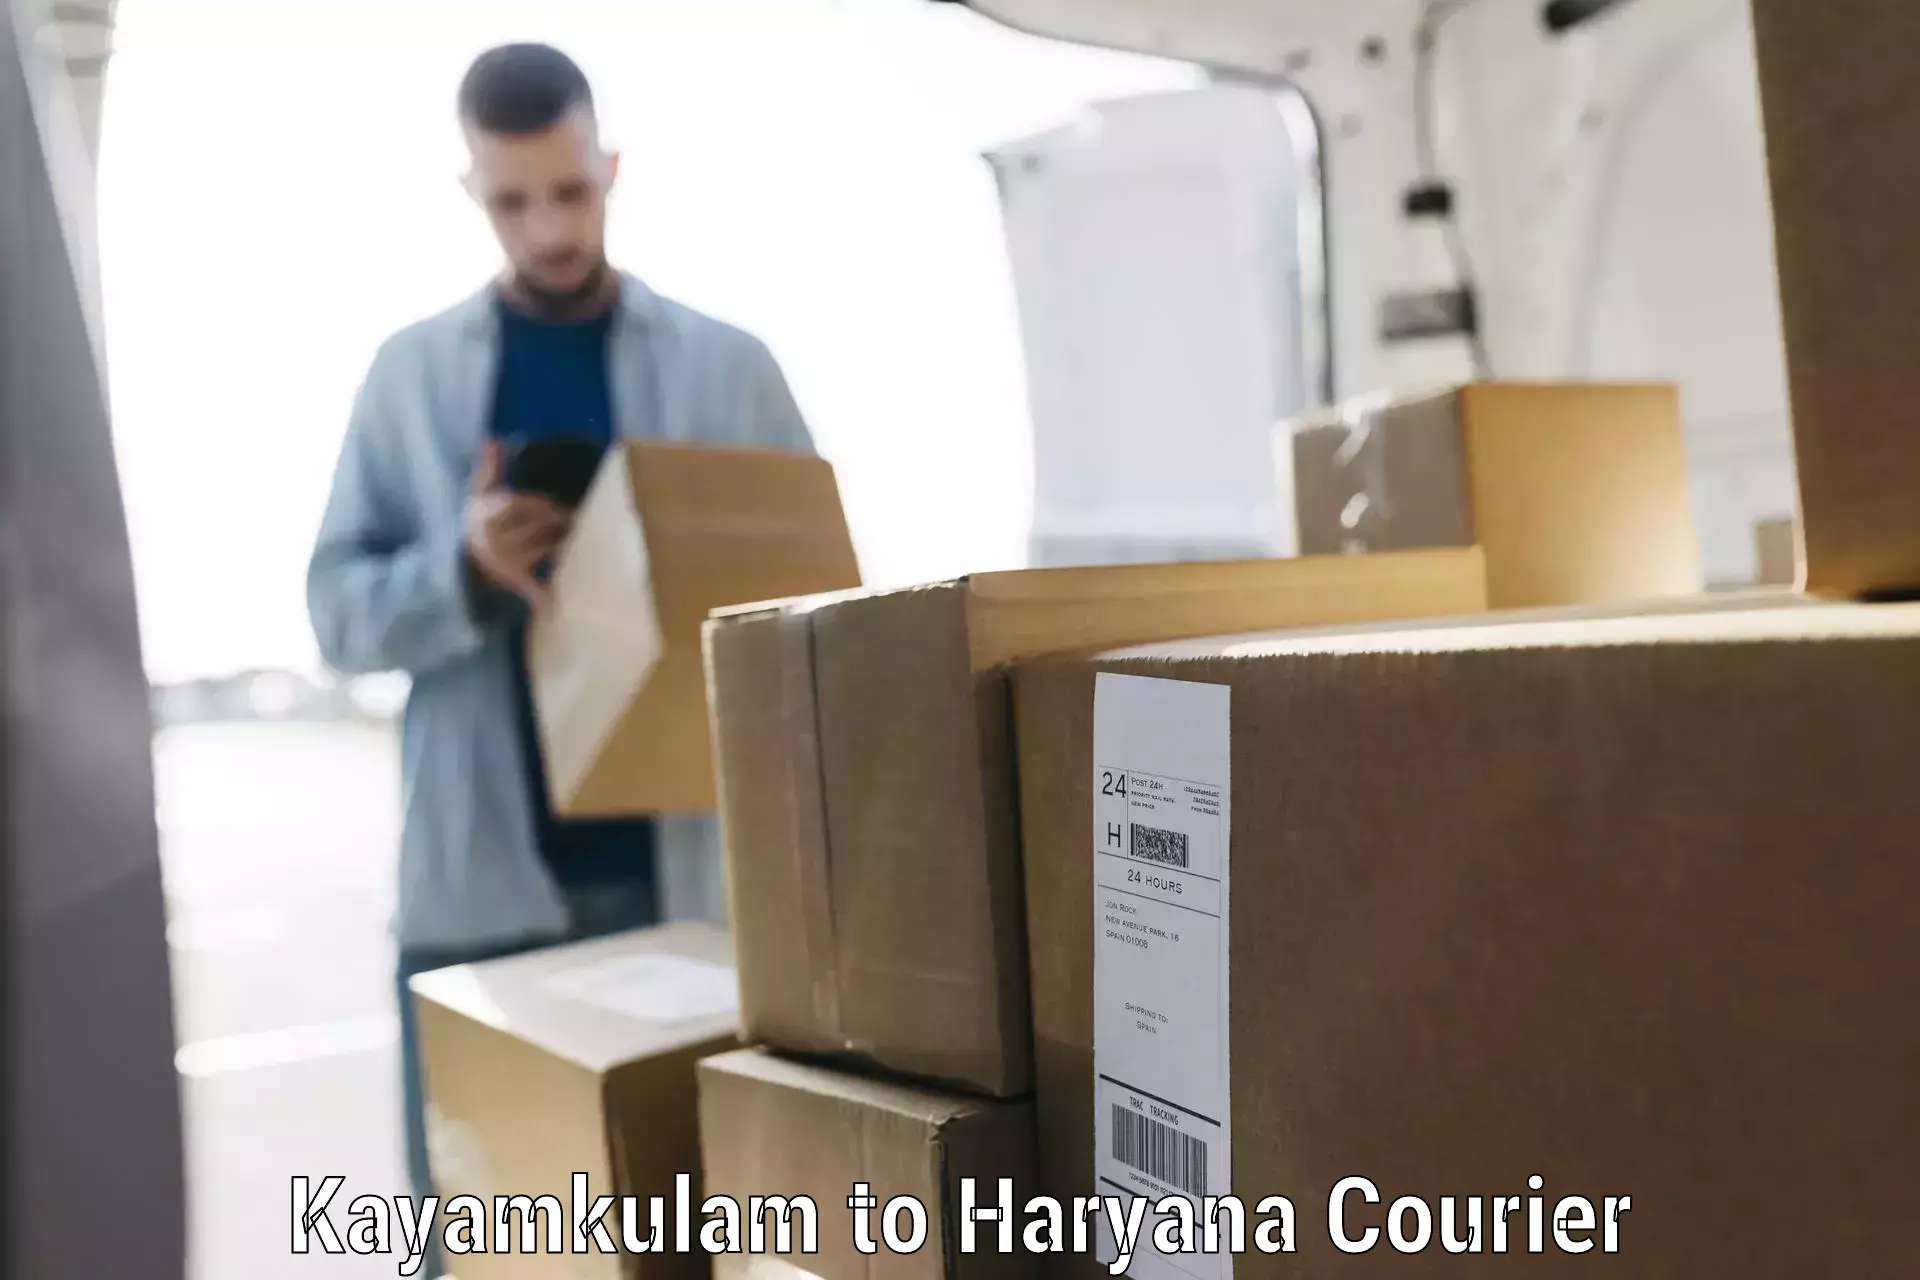 Luggage delivery app Kayamkulam to Haryana